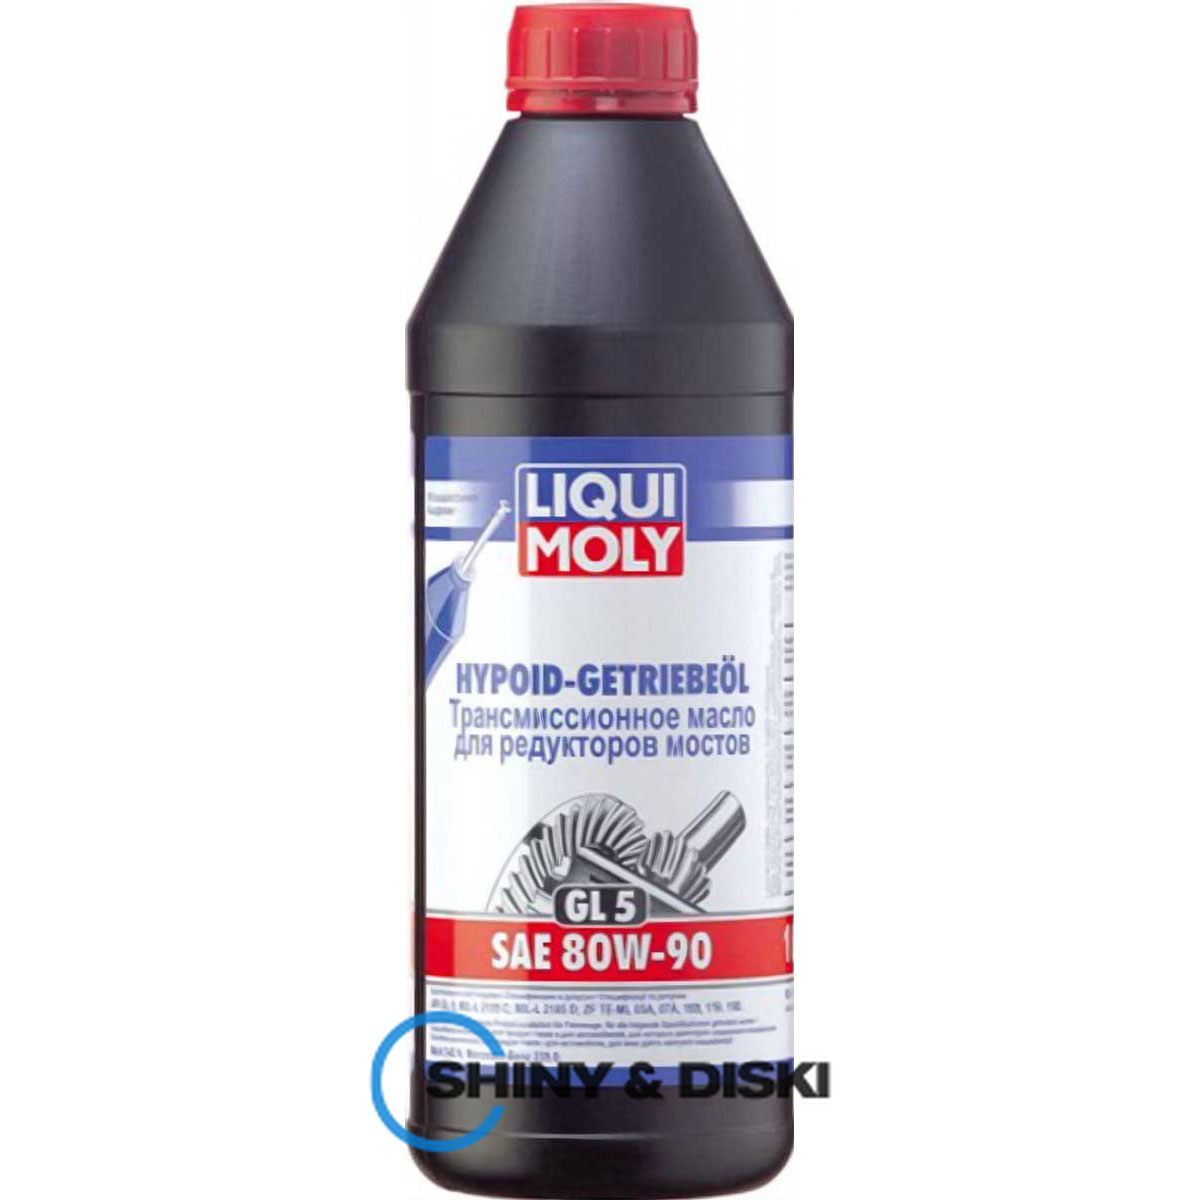 liqui moly hypoid-getriebeoil gl-5 85w-90 (1л)